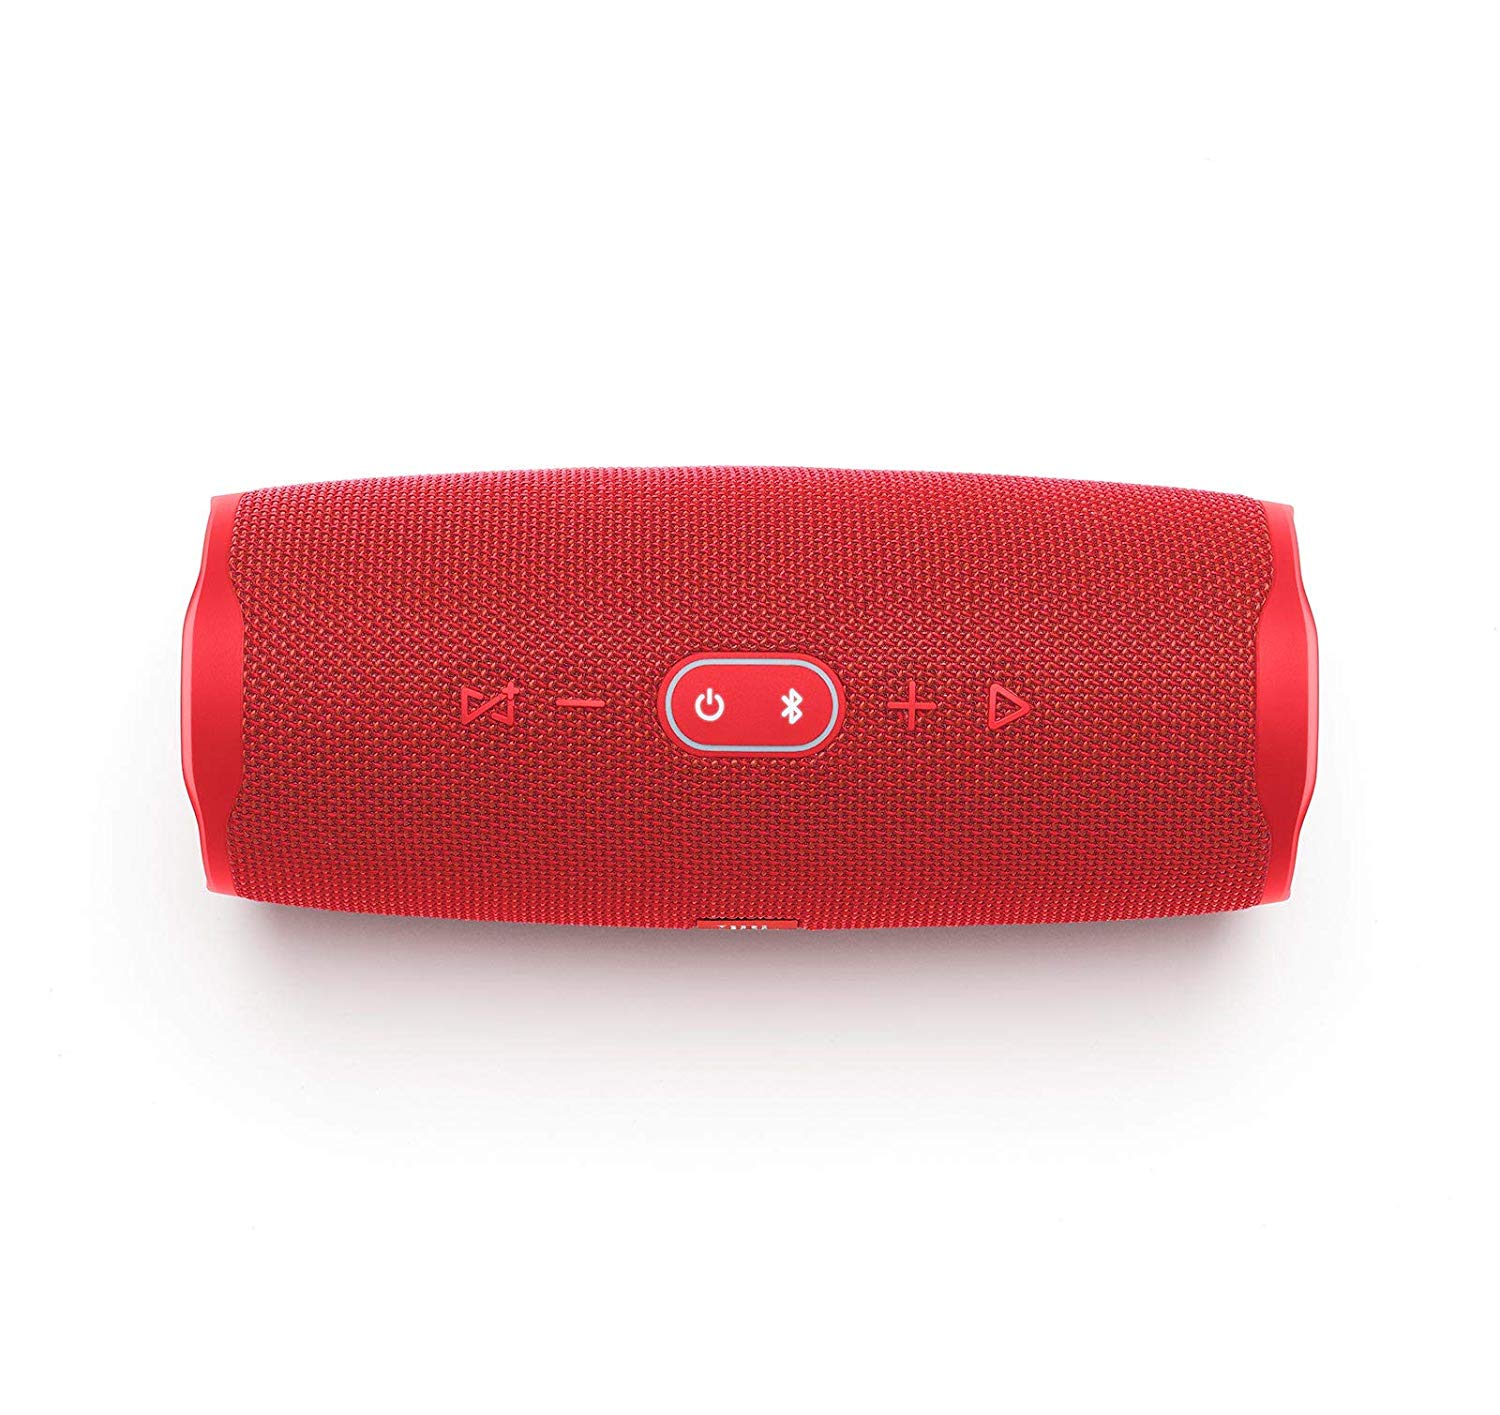 JBL Charge 4 Portable Waterproof Wireless Bluetooth Speaker - Red - image 4 of 5